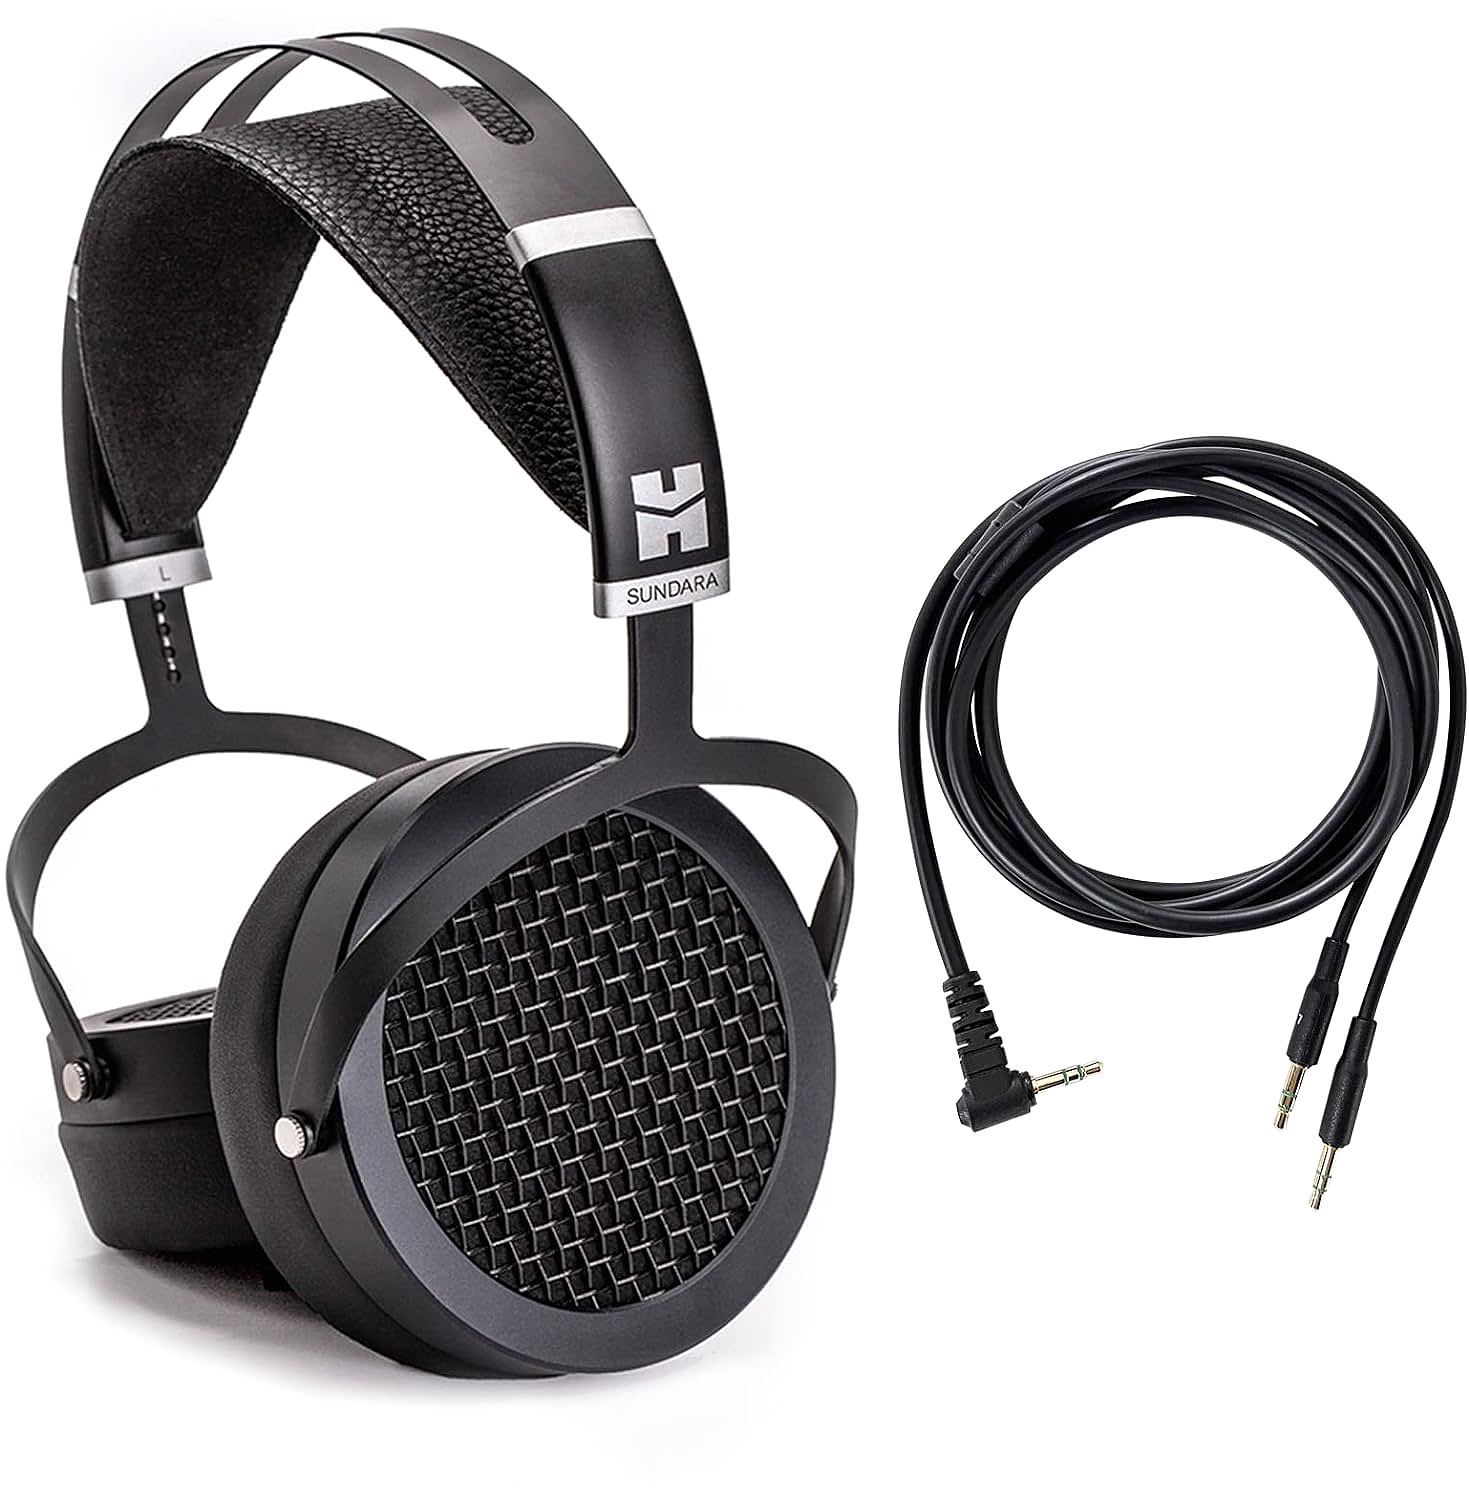 HIFIMAN SUNDARA Wireless HiFi Headphones: Exquisite Sound Quality and Feather-Light Comfort in Wireless HiFi Headphones